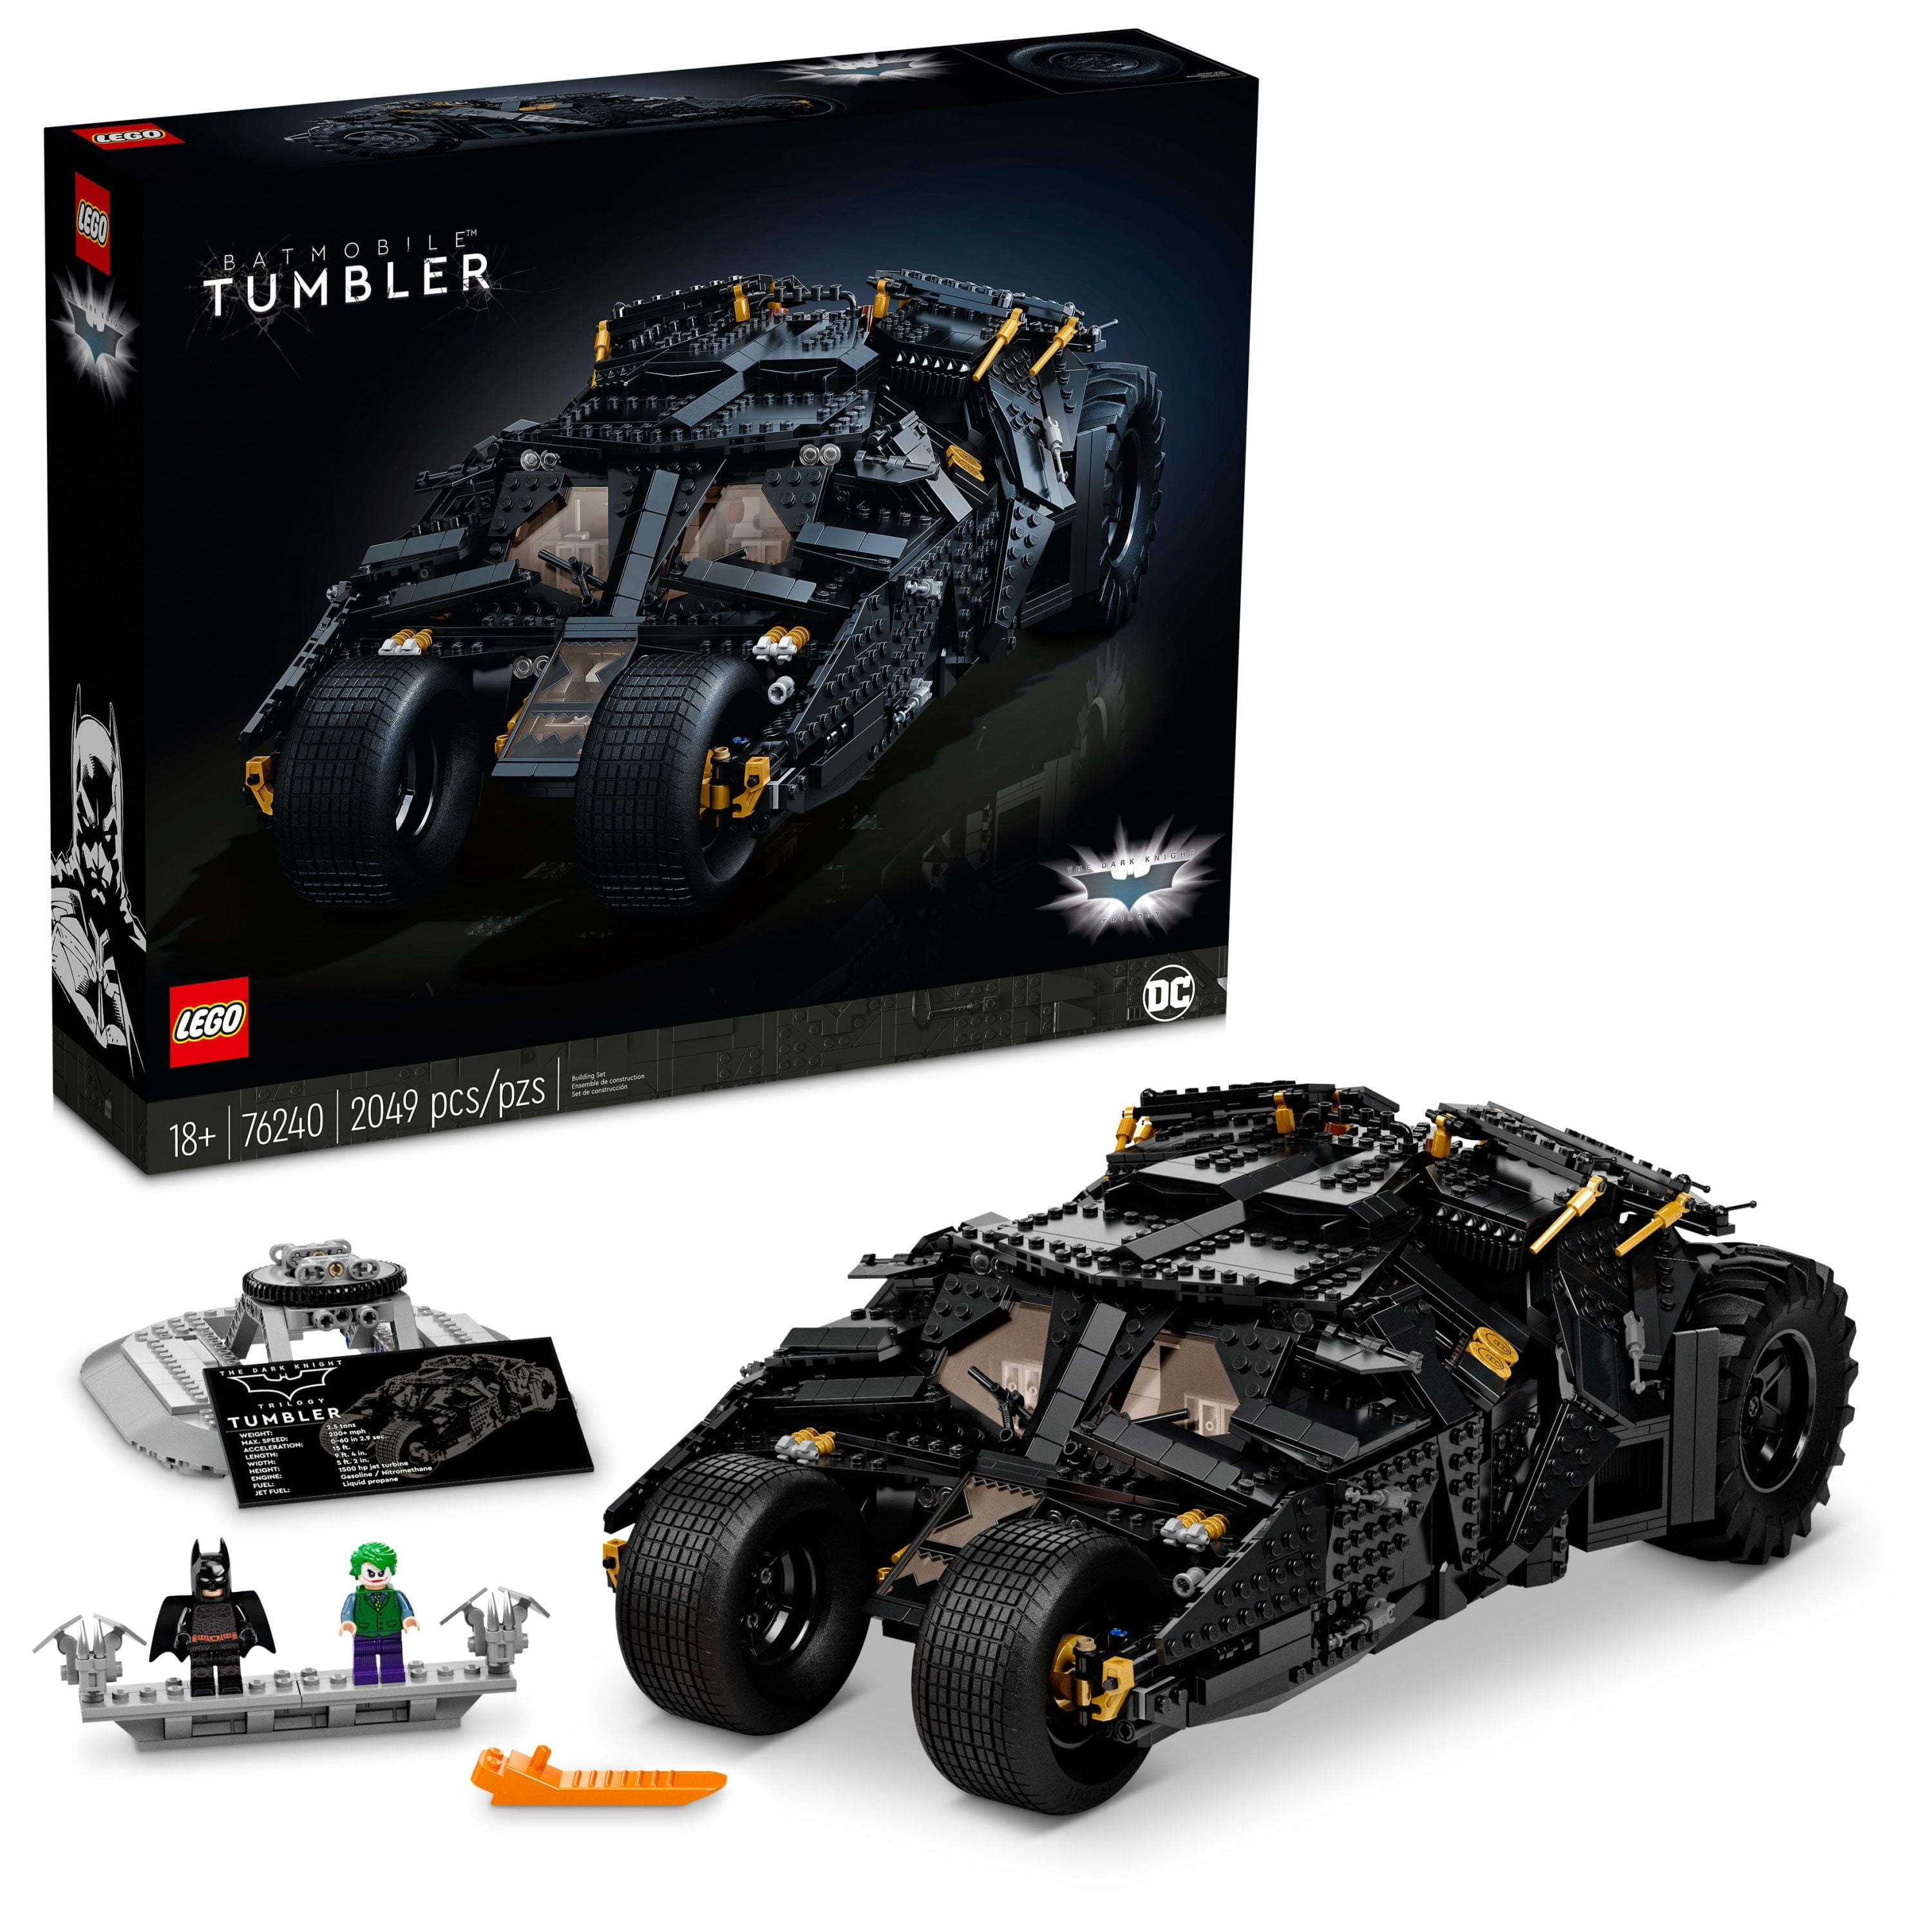 flamme Ja offentlig LEGO DC THE Batman Batmobile Tumbler 76240 Building Kit (2,049 Pieces) -  Walmart.com